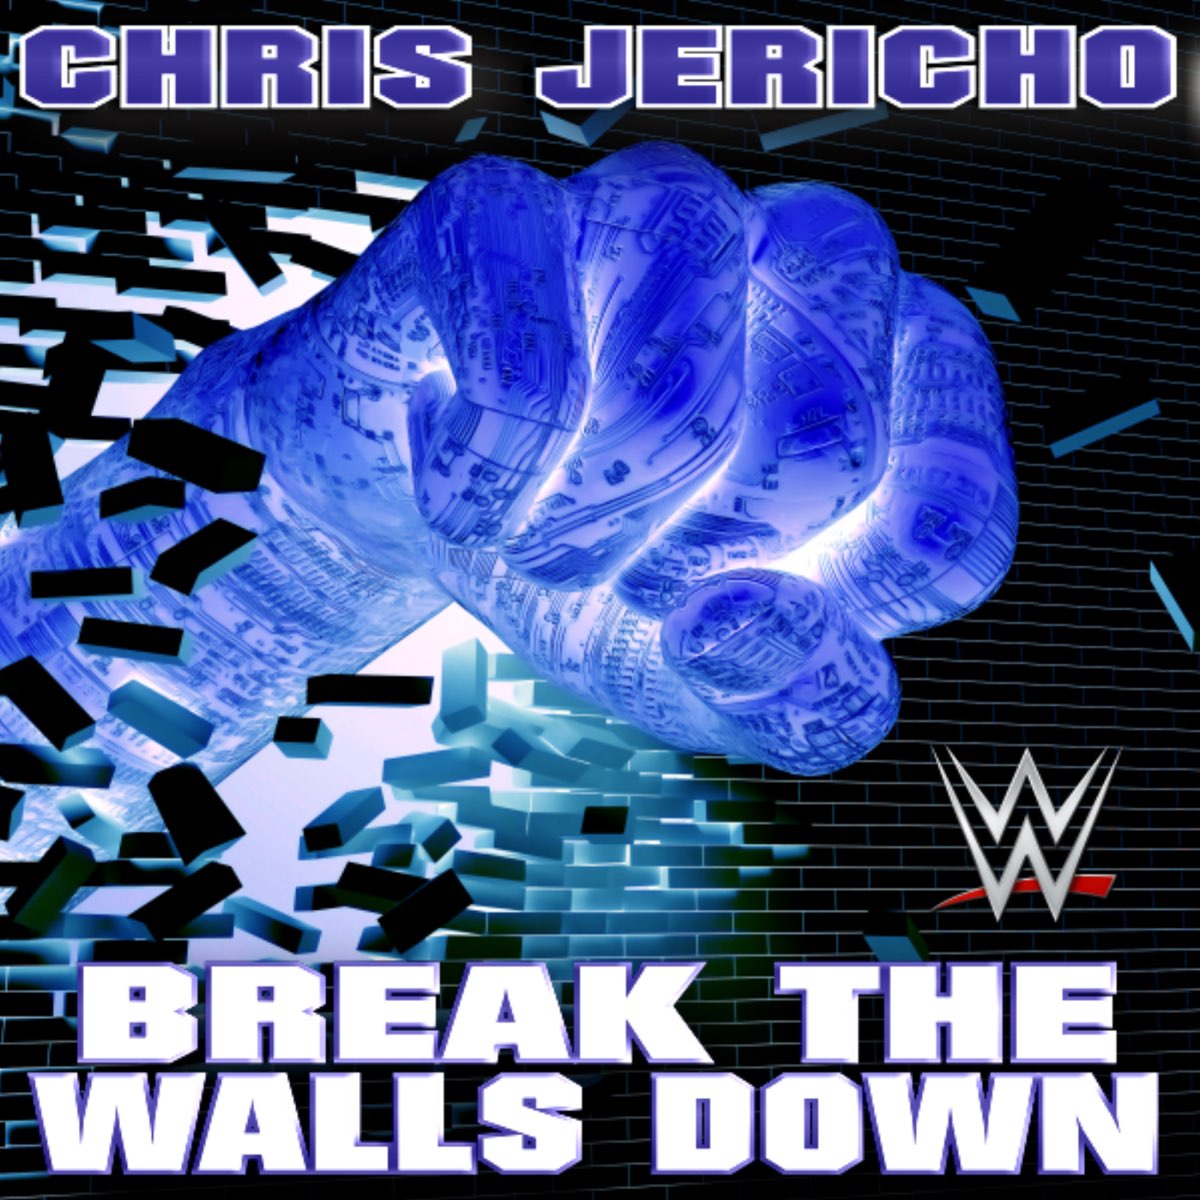 Break this down. Jim Johnston. Break the Wall песня. Песни Джерико. Joda – Breaking down Walls.